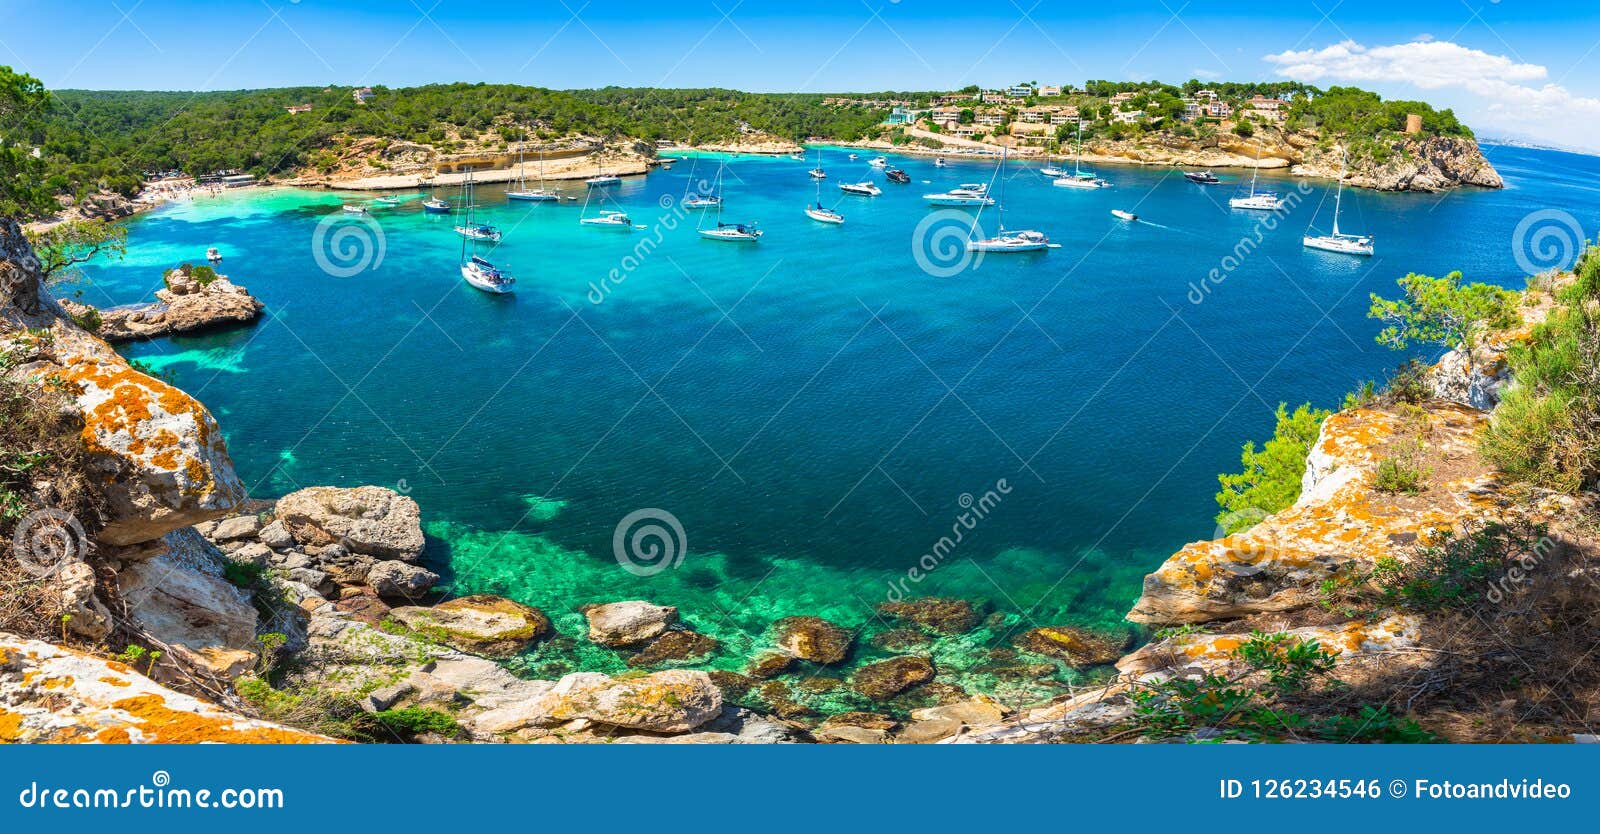 beautiful island panorama view of bay with yachts at portals vells beaches, majorca, spain